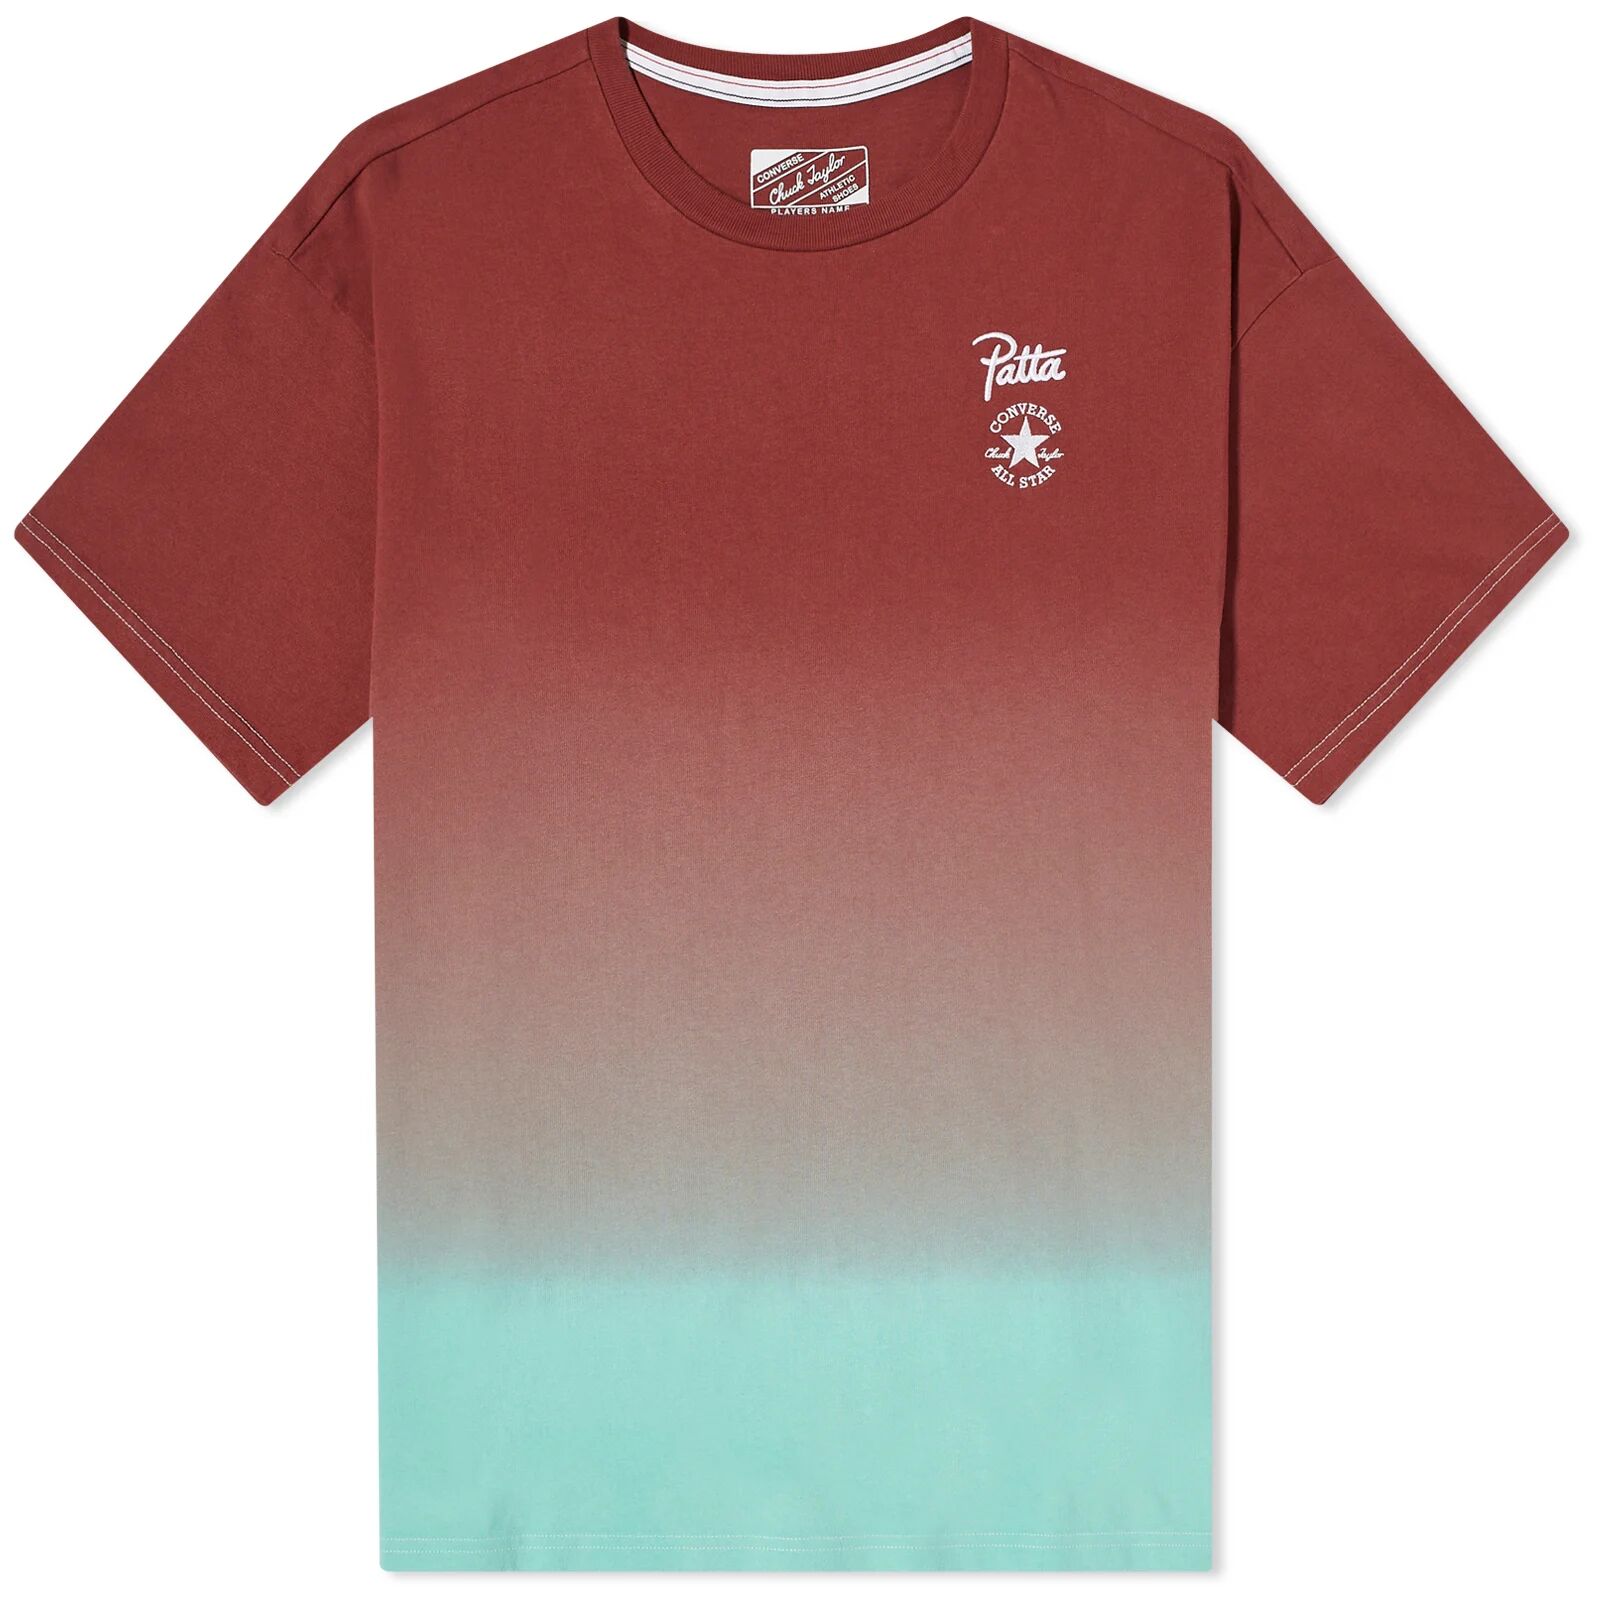 Converse x Patta T-Shirt in Patta Gradient, Size X-Small